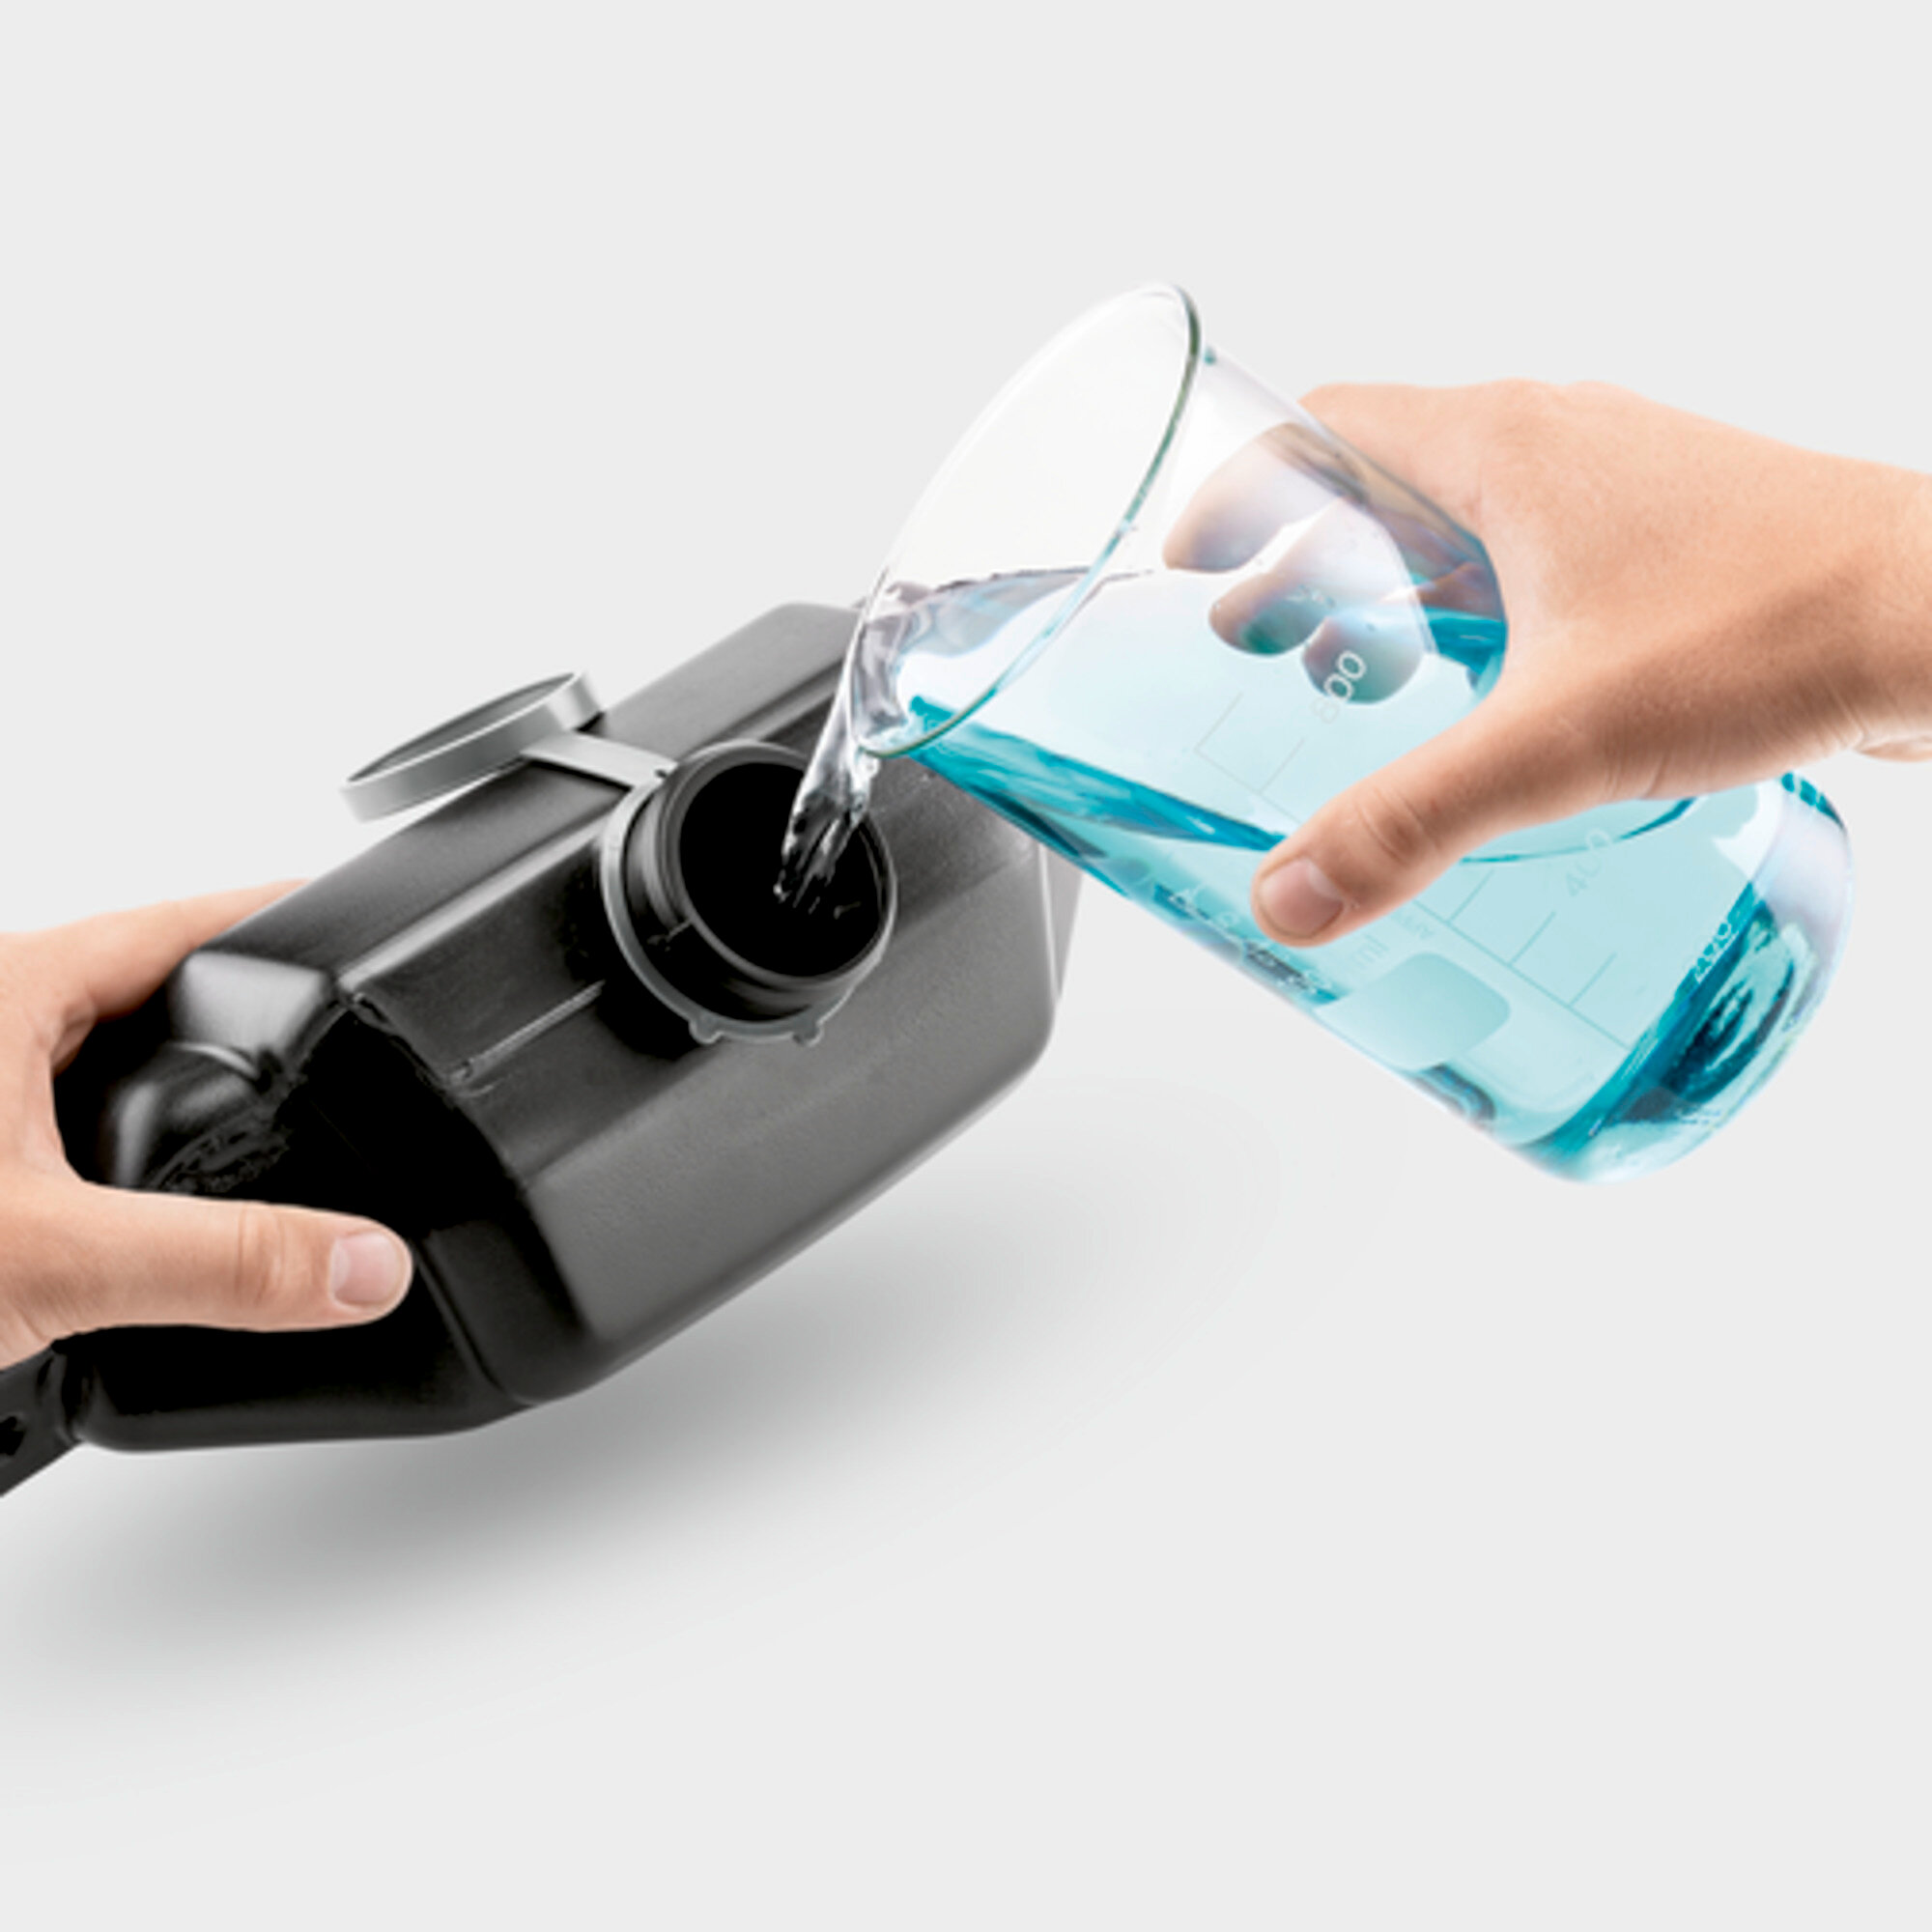 Aparat de spalat cu presiune G 7.180: Rezervor de detergent detașabil